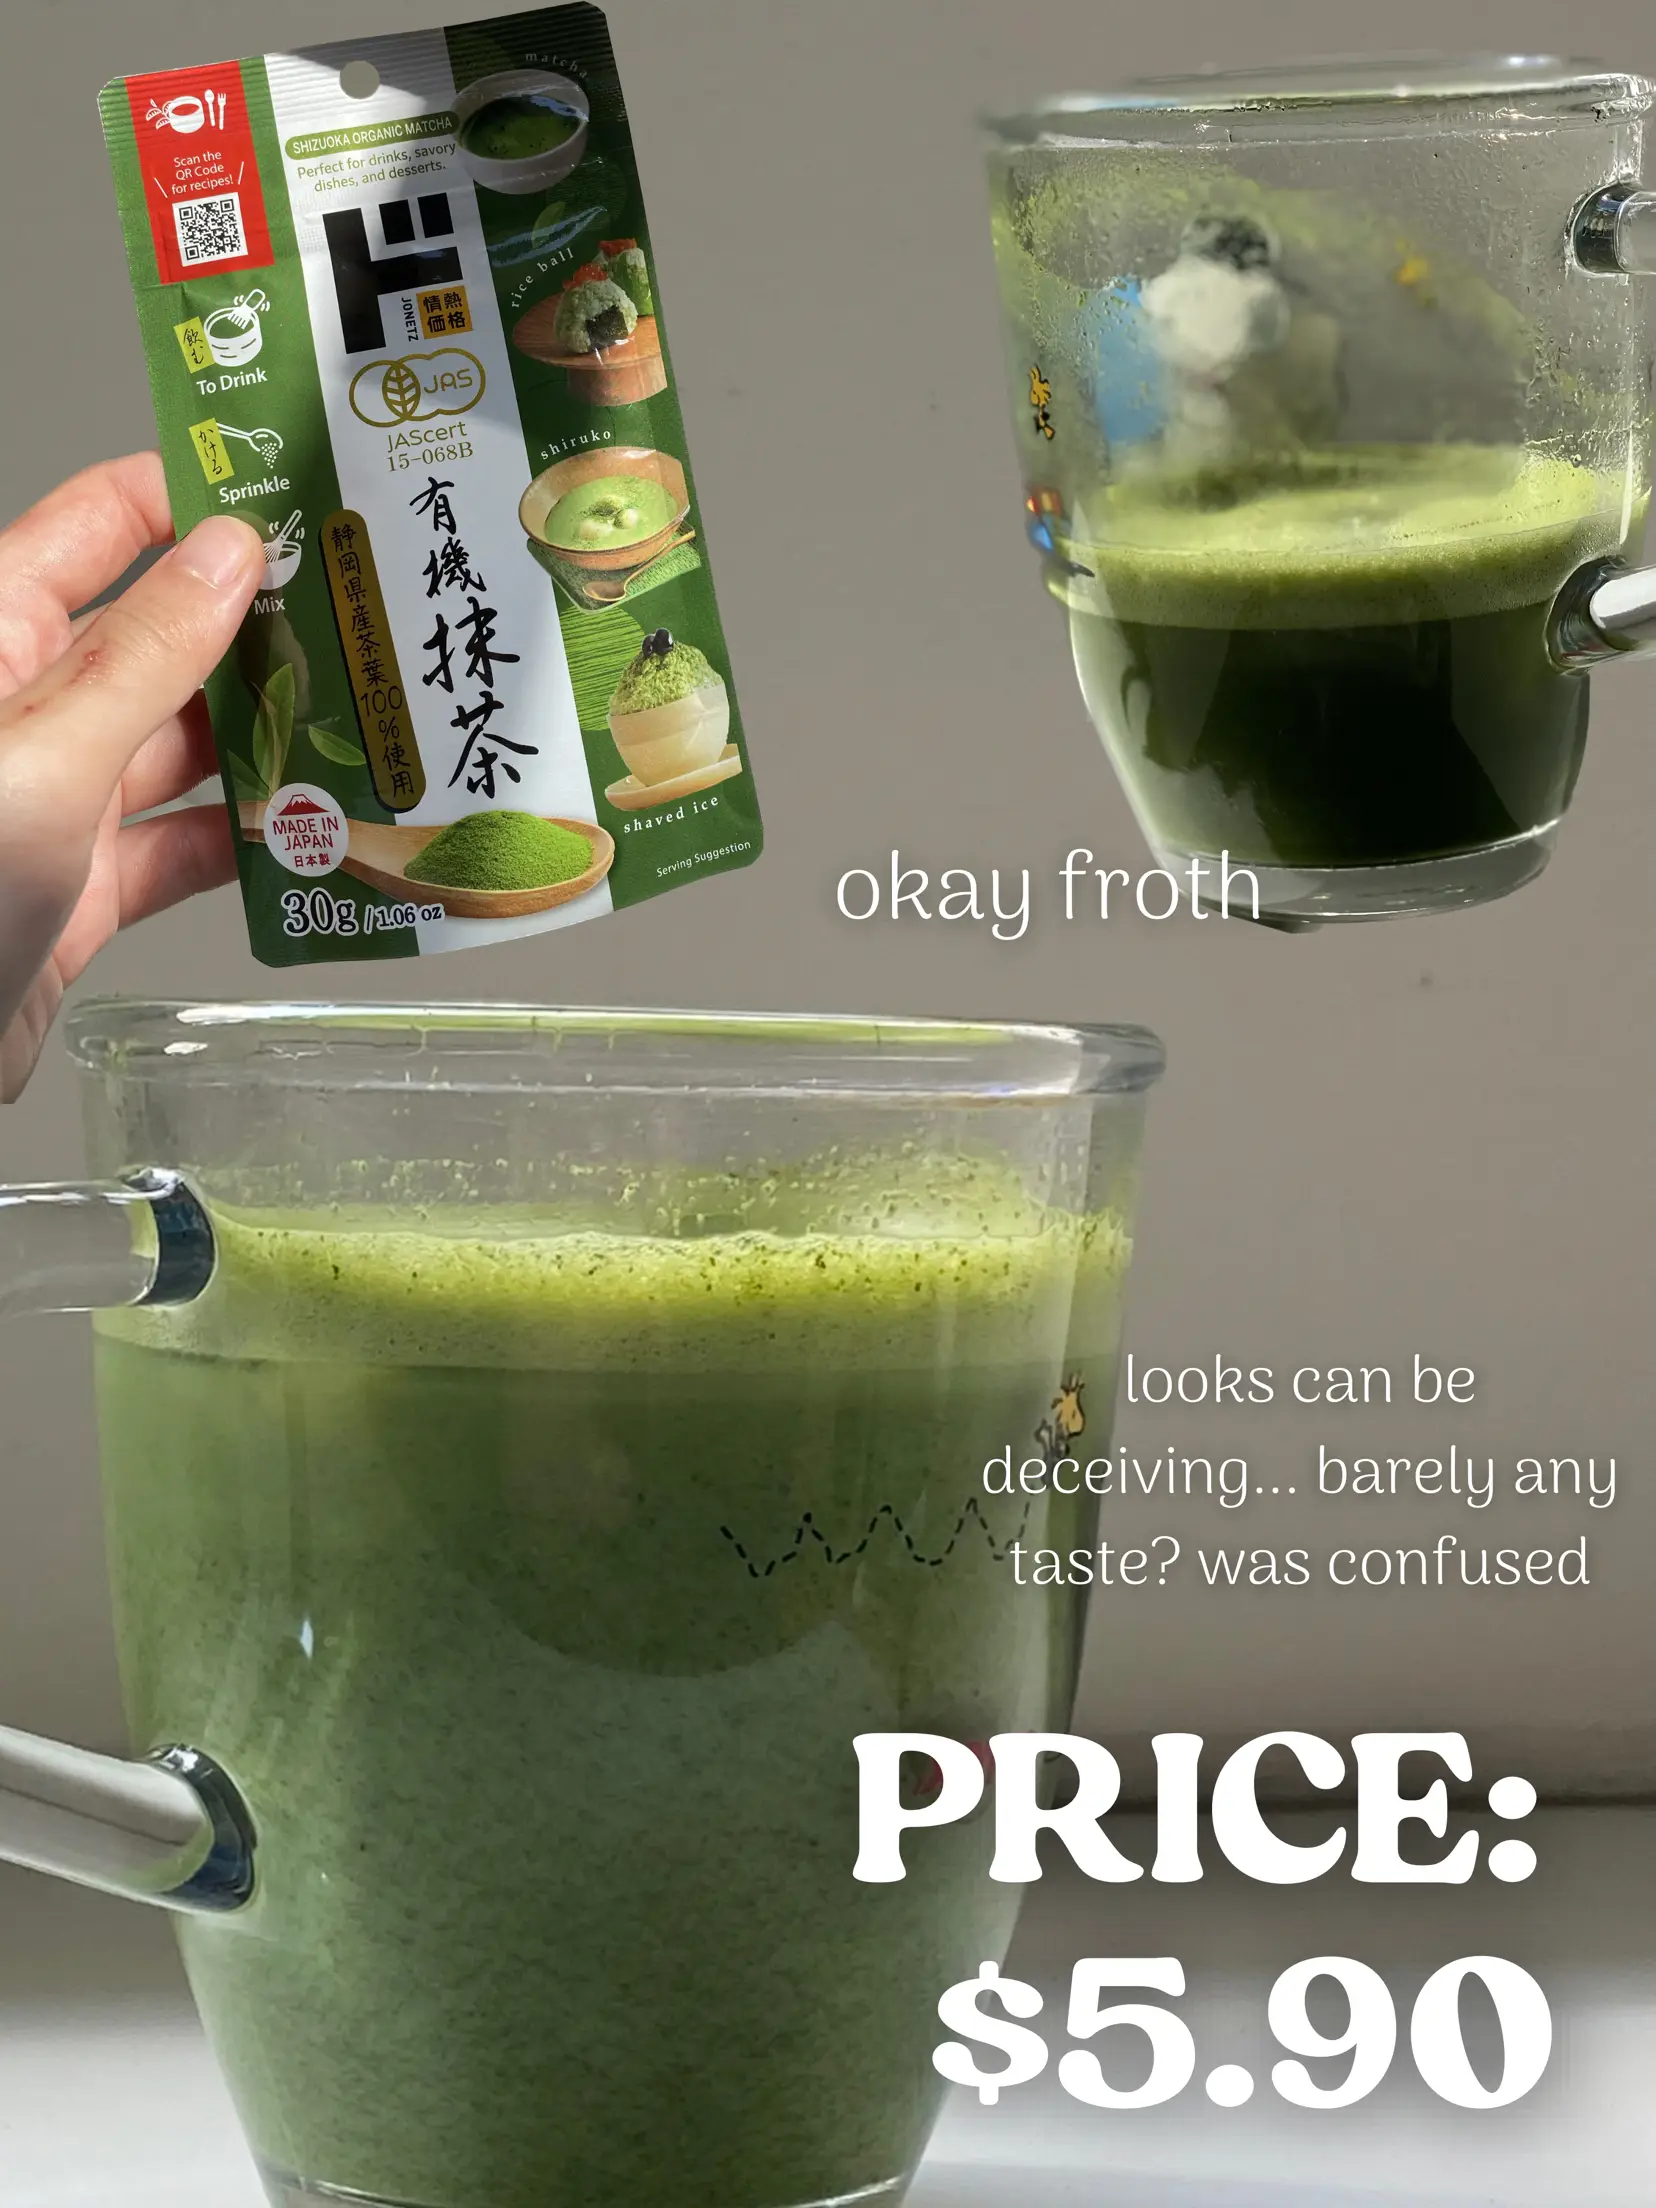 Té Matcha Green Tea Powder – KSEOUL